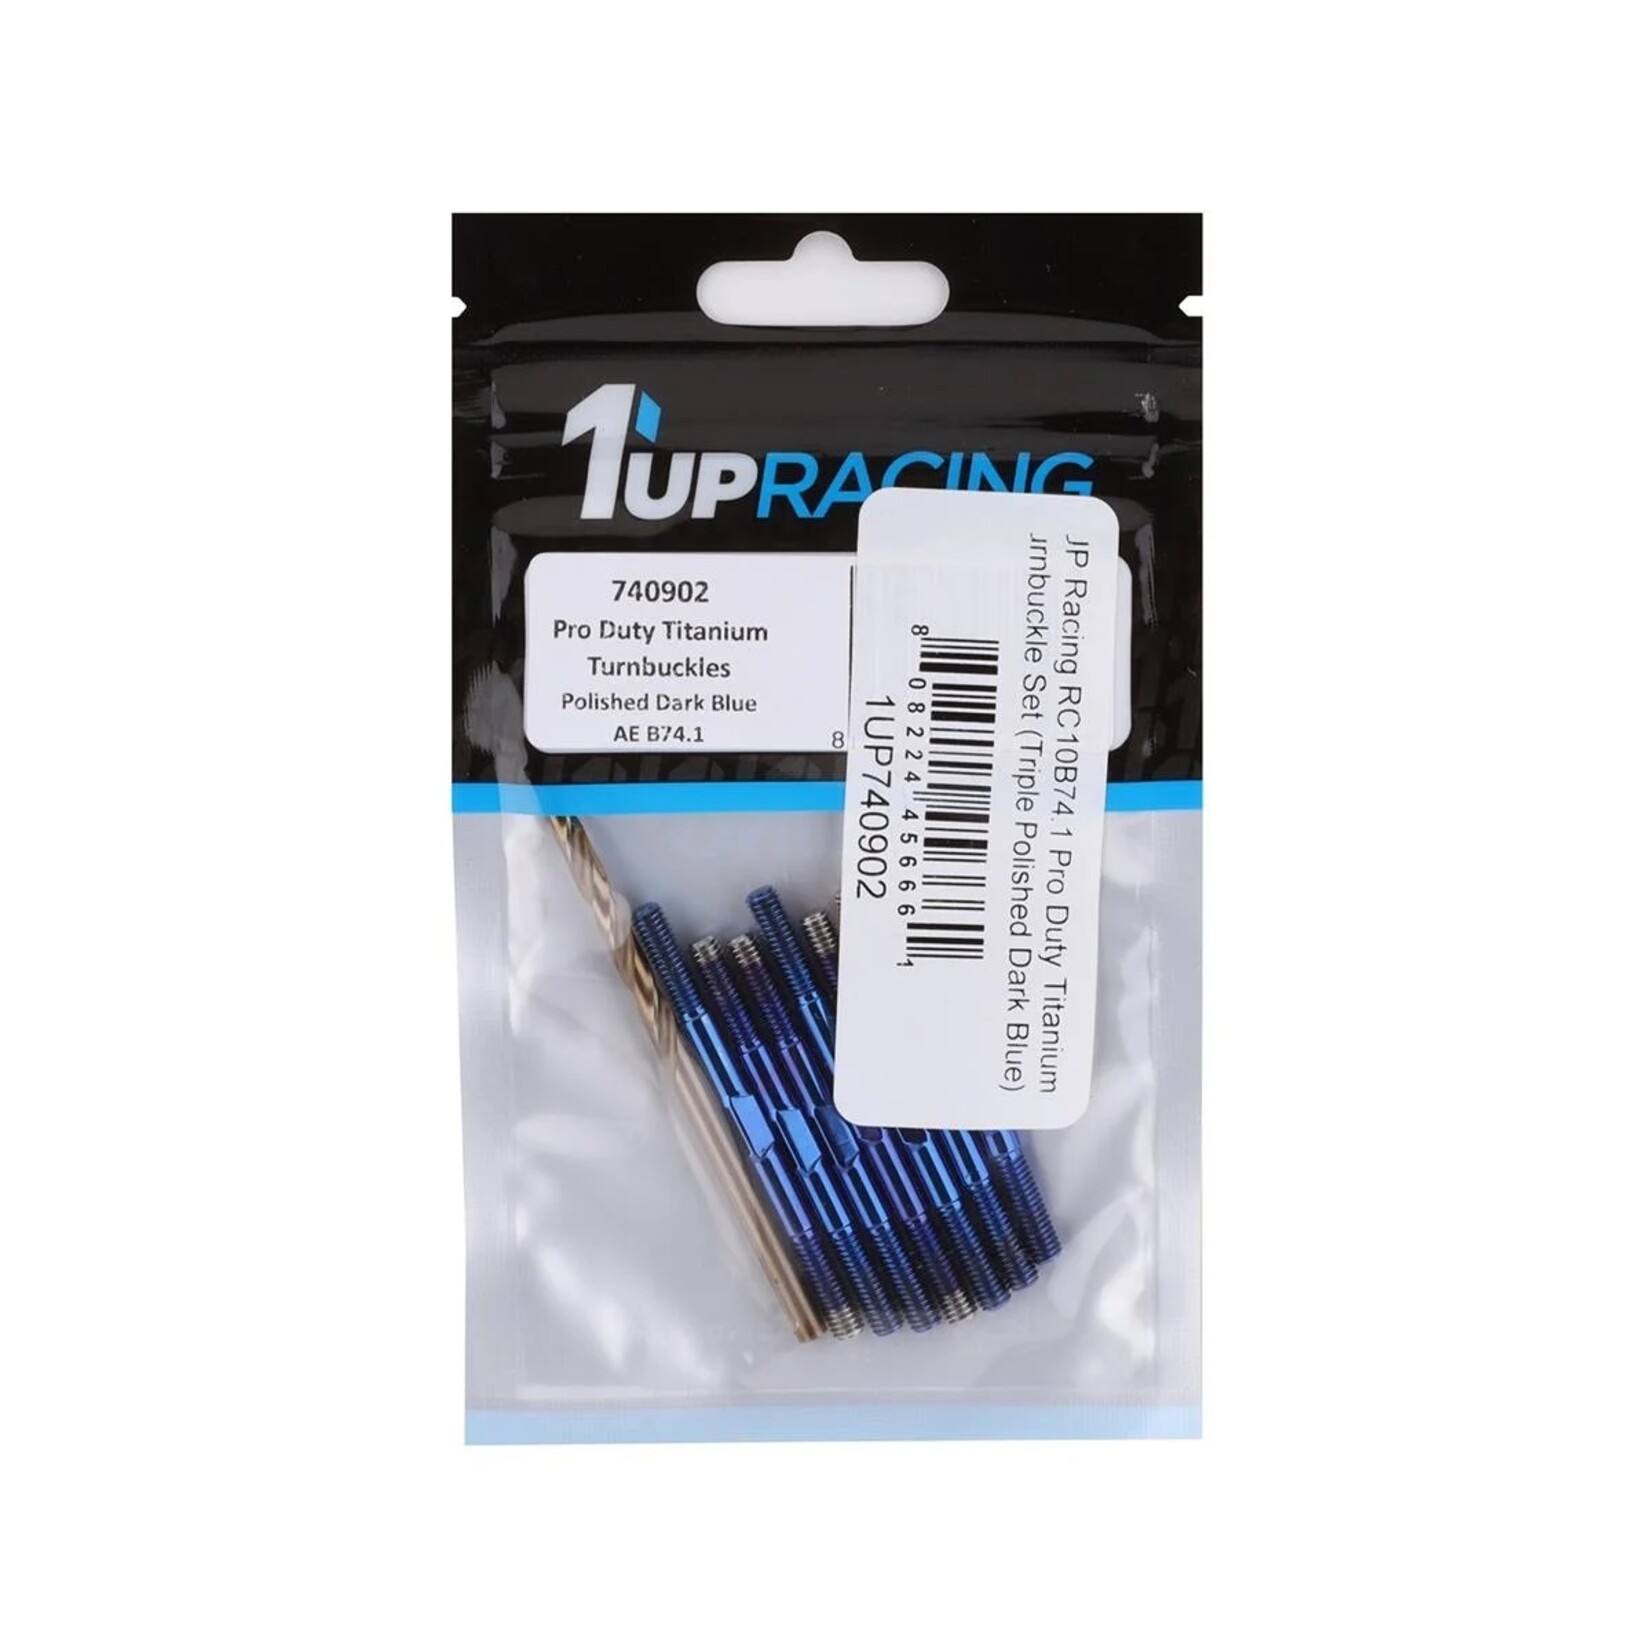 1UP Racing 1UP Racing RC10B74.1 Pro Duty Titanium Turnbuckles (Triple Polished Dark Blue) #740902